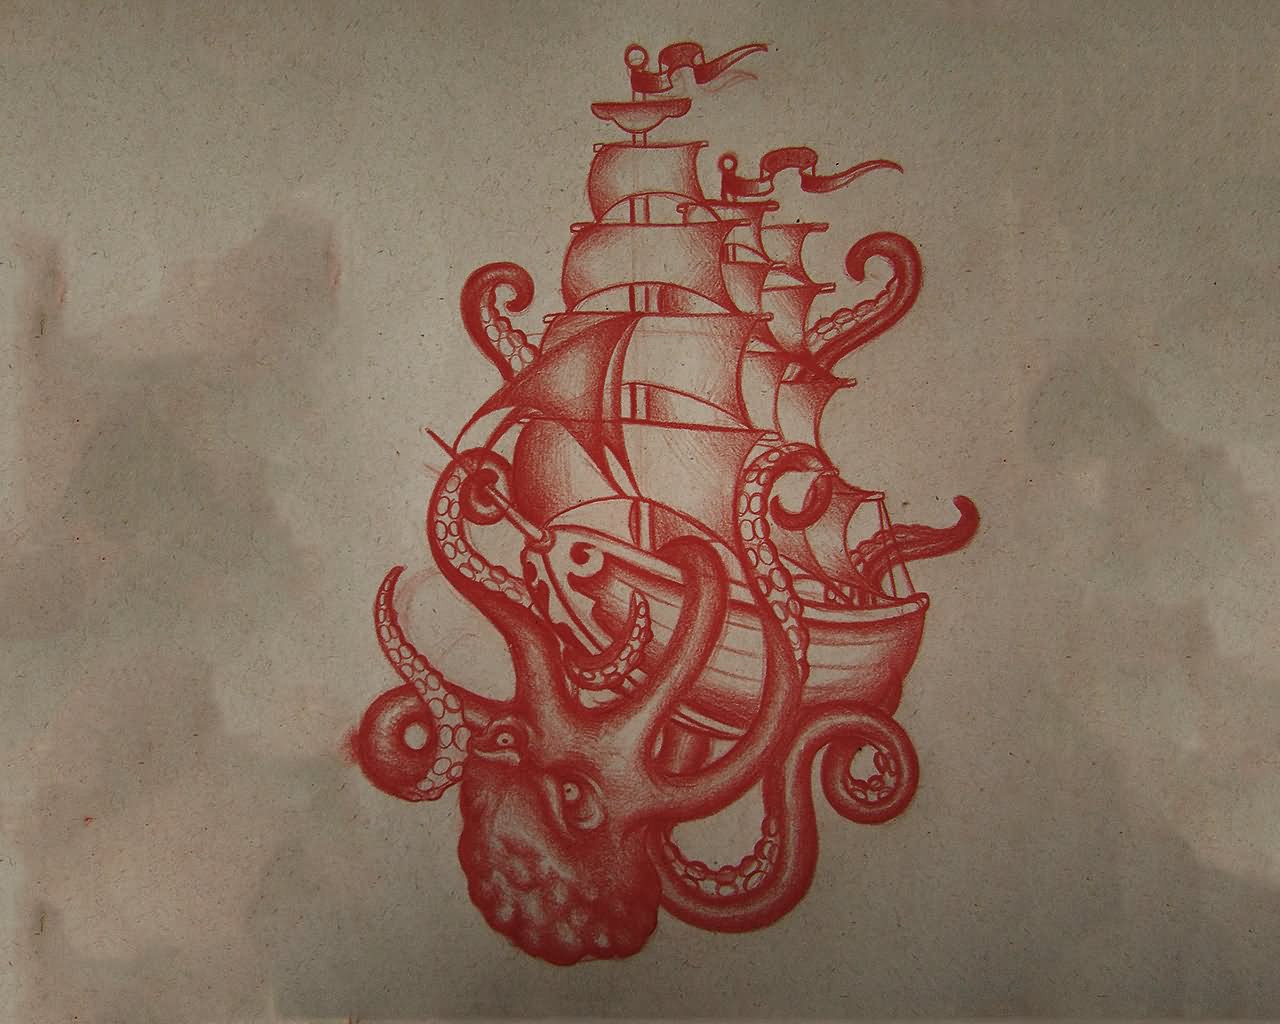 Red Octopus Ship Tattoo Design Idea